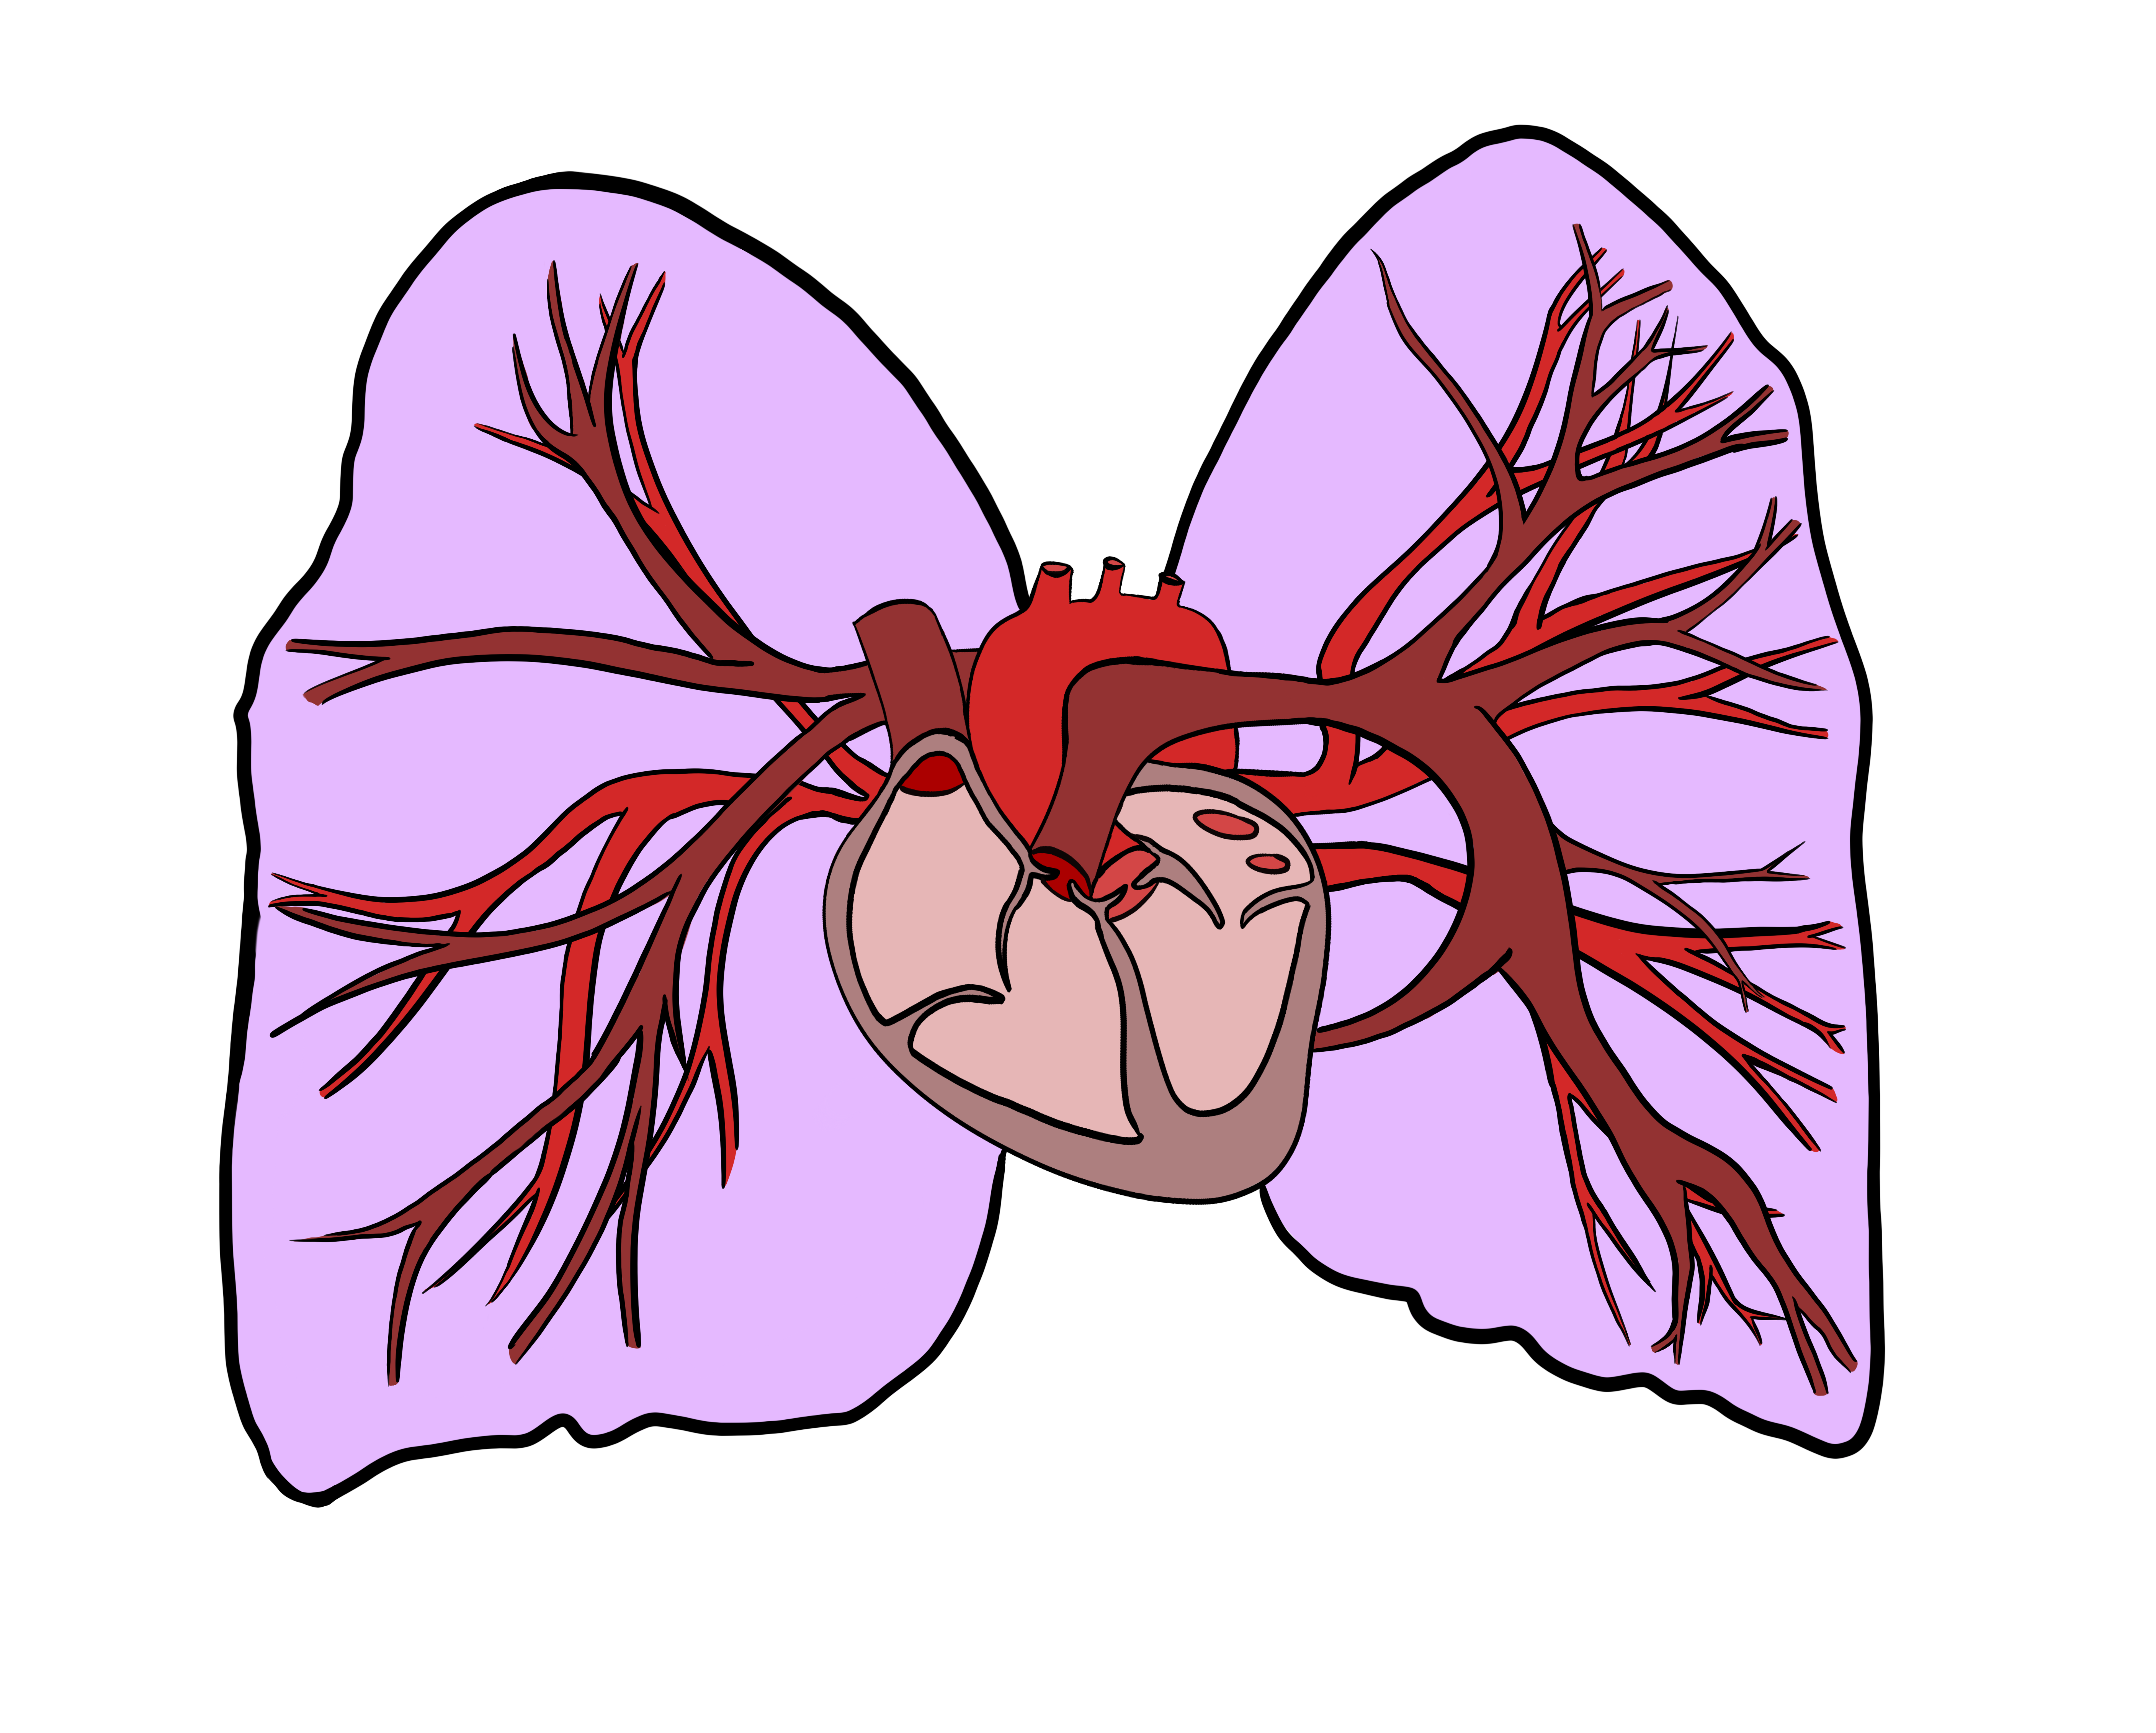 Heart_Lungs